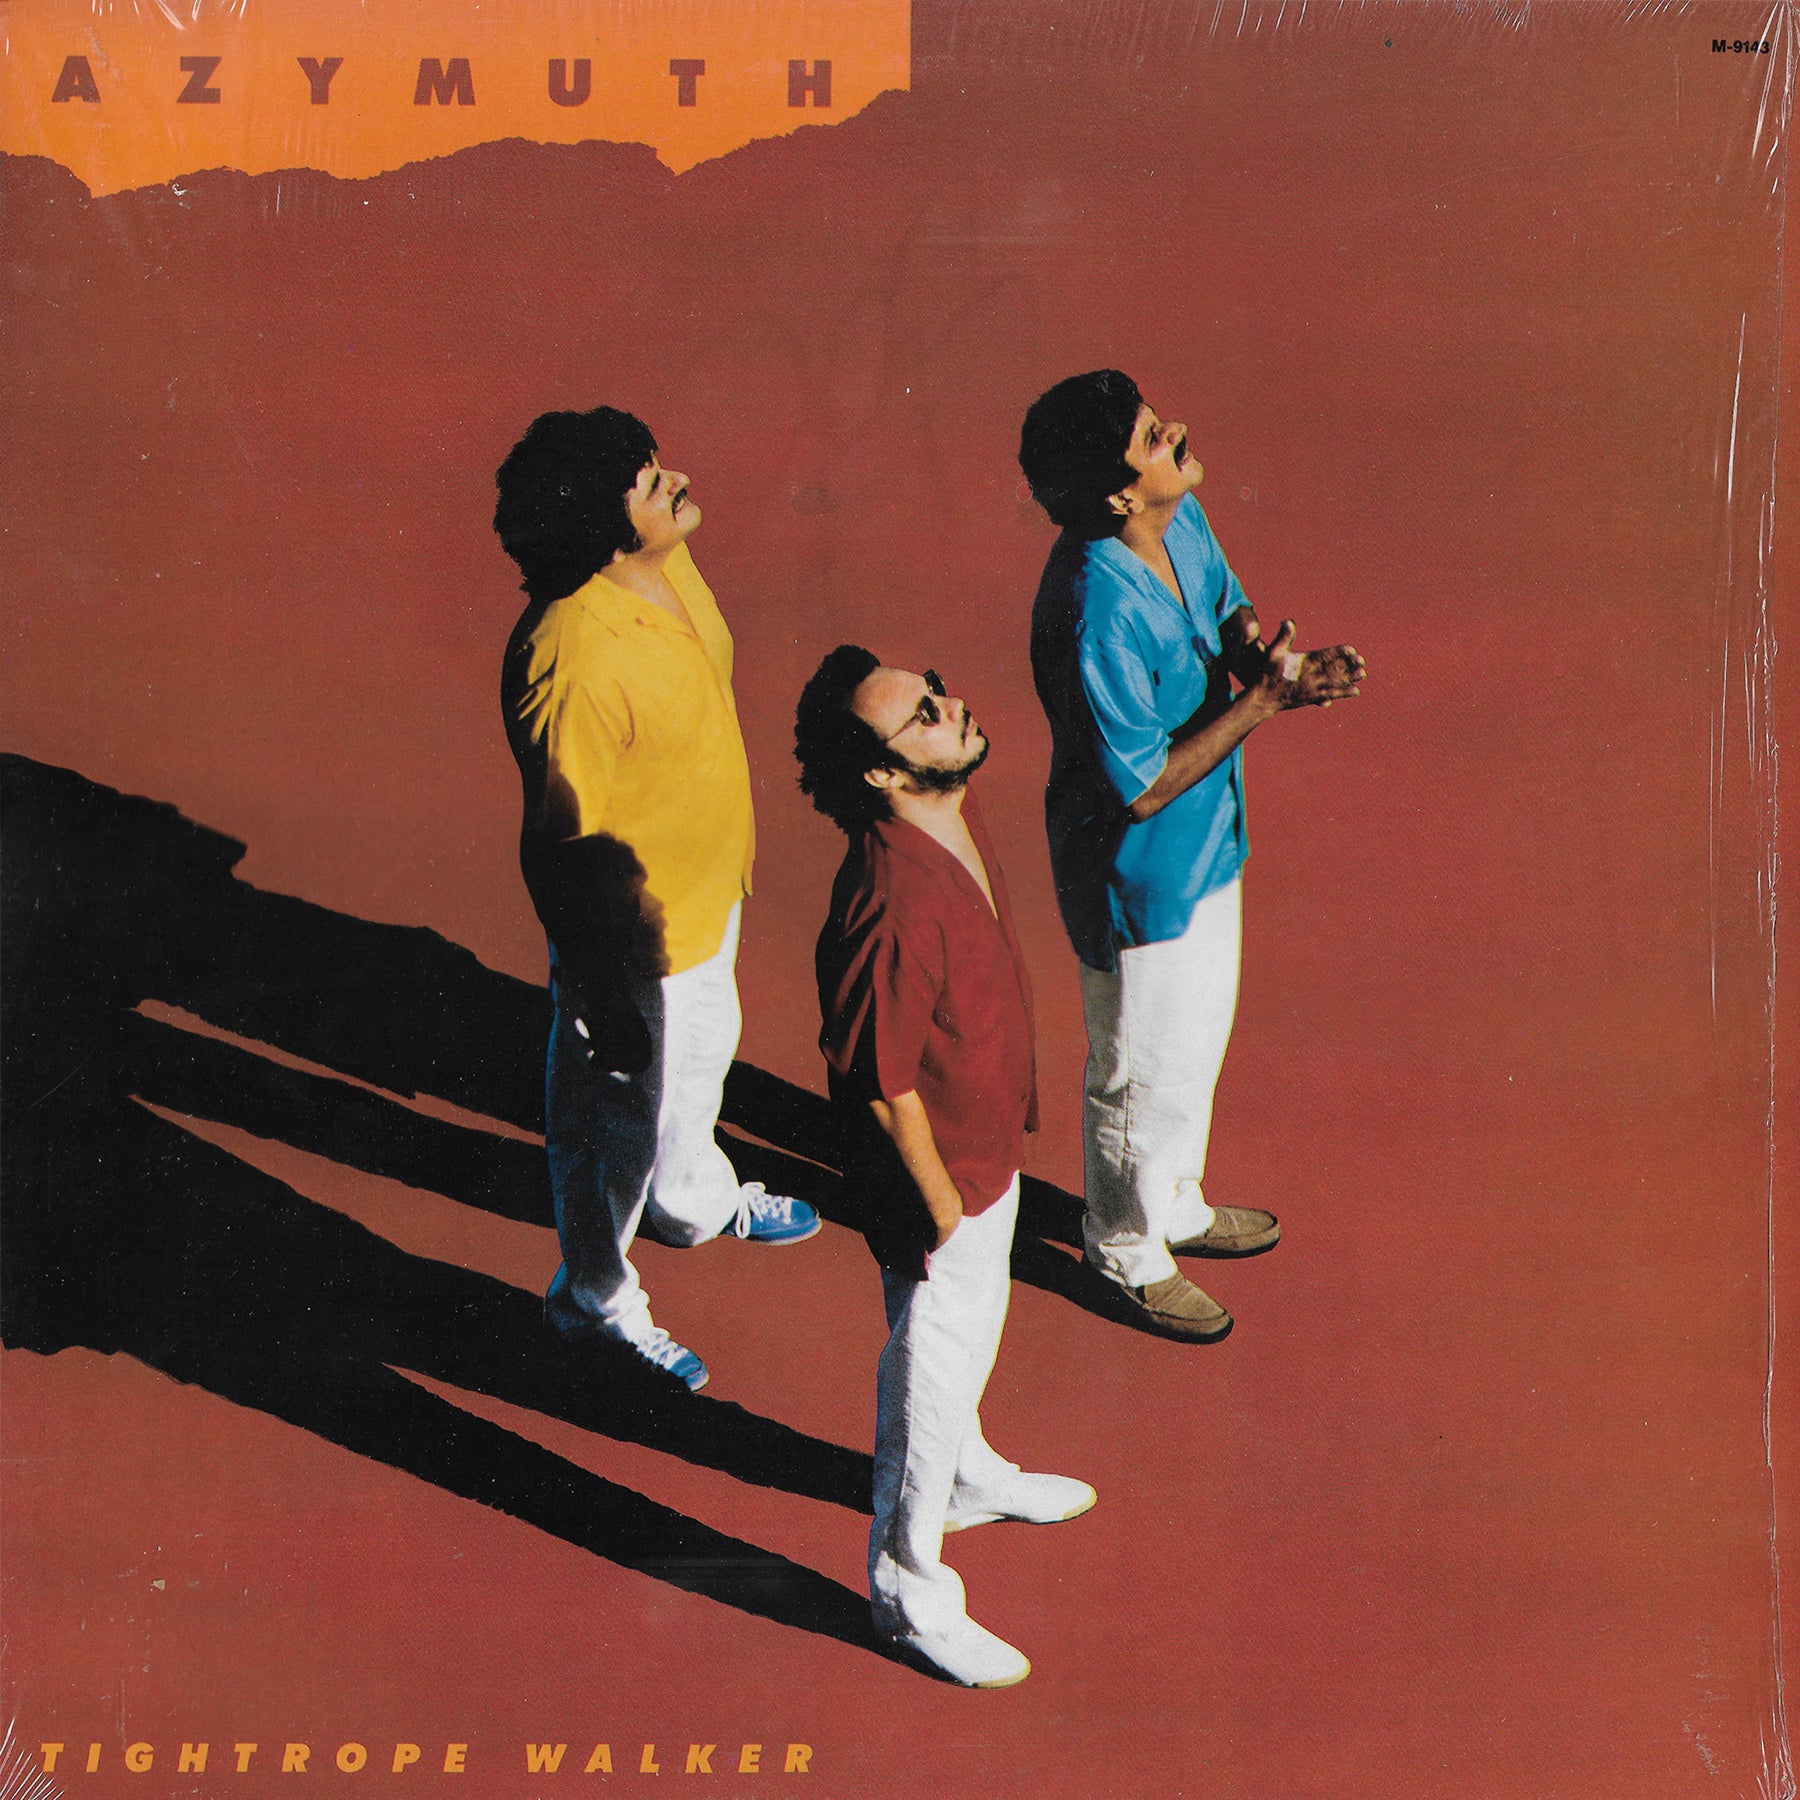 Azymuth - Tightrope Walker